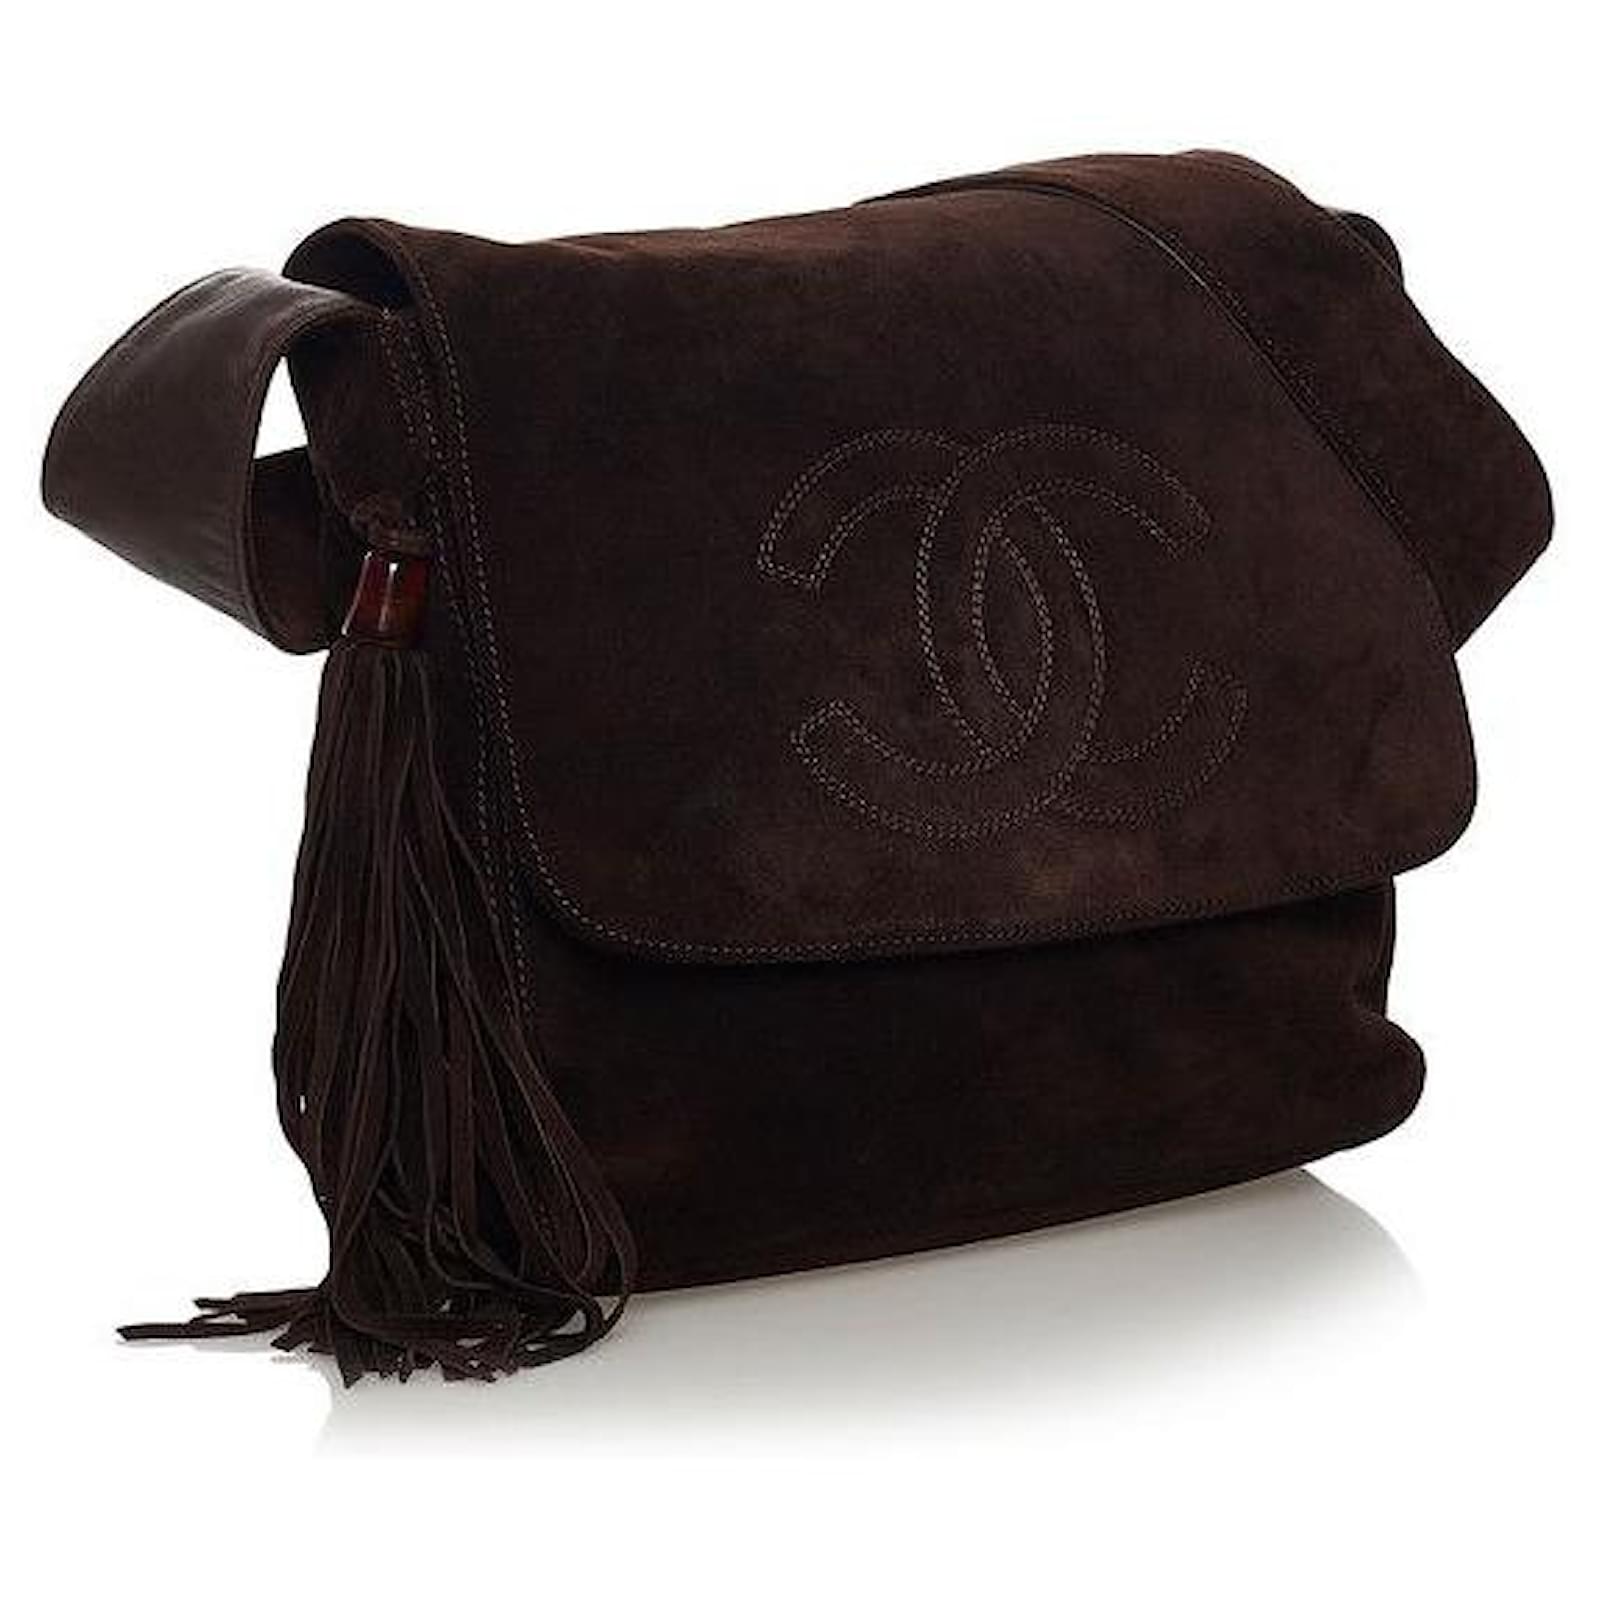 Buy [Used] CHANEL Shoulder Bag Fringe Suede Brown A08918 from